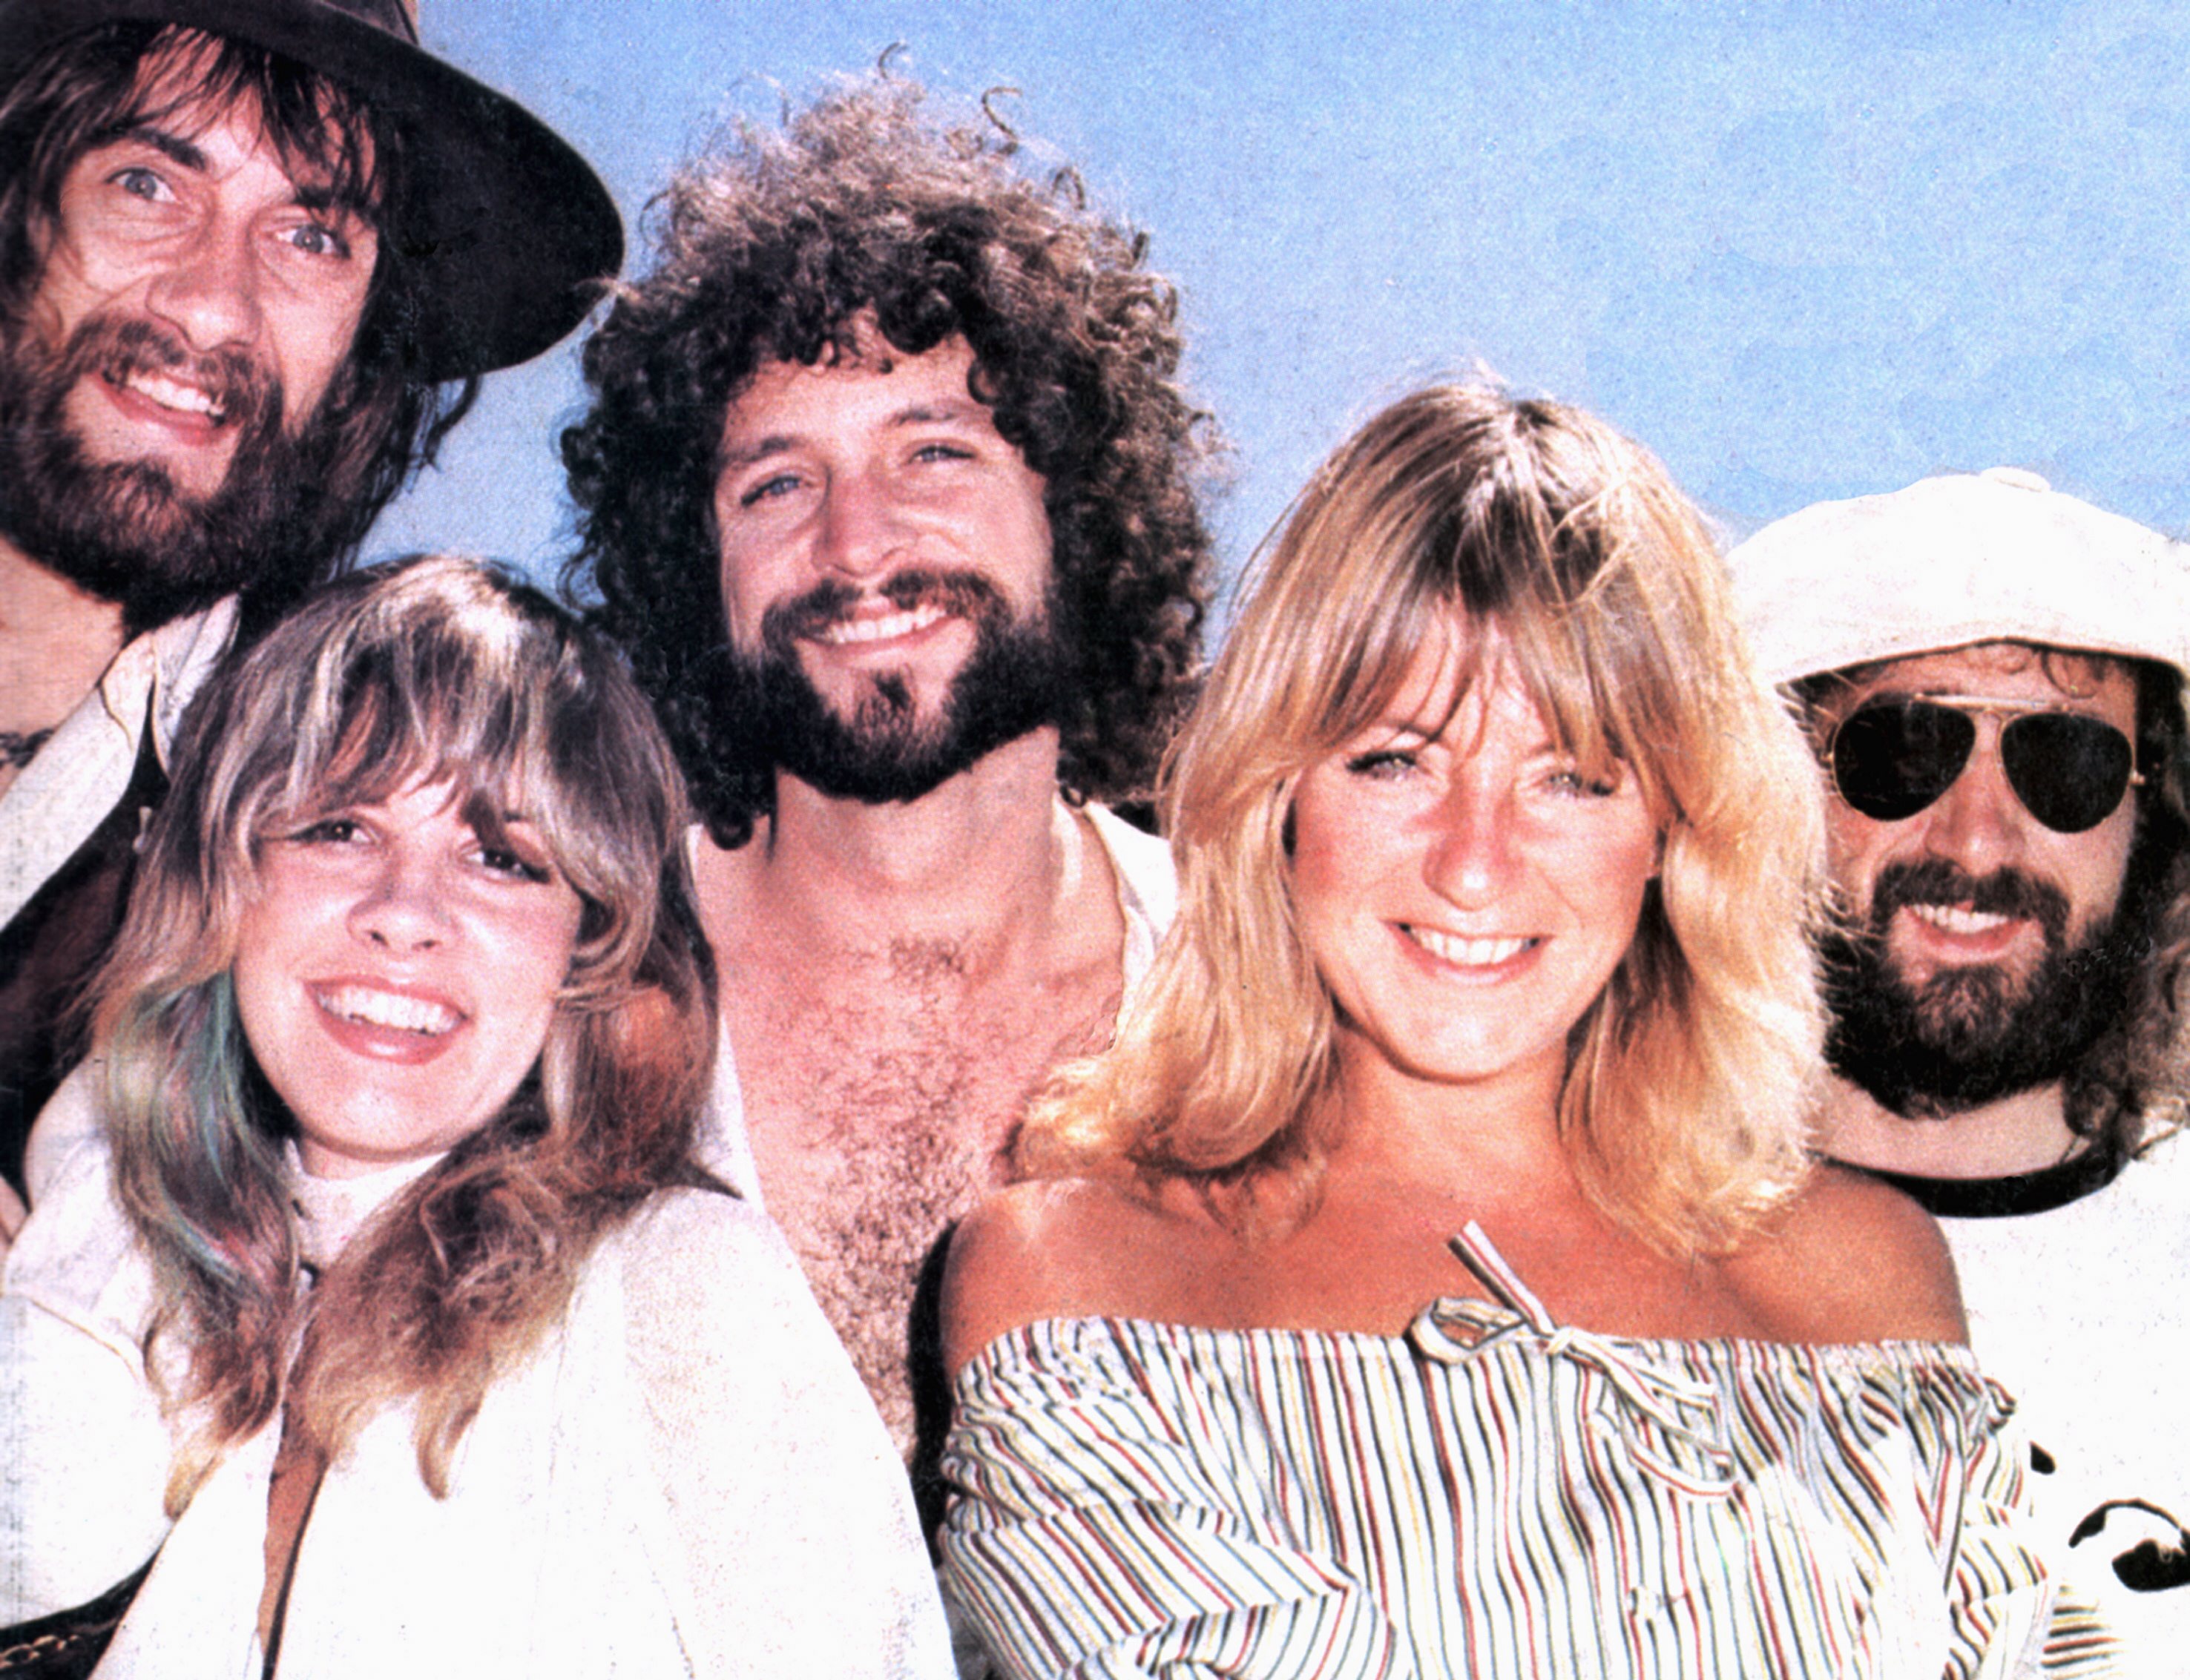 Mick Fleetwood, Stevie Nicks, Lindsey Buckingham, Christine McVie, and John McVie pose together against a blue background.